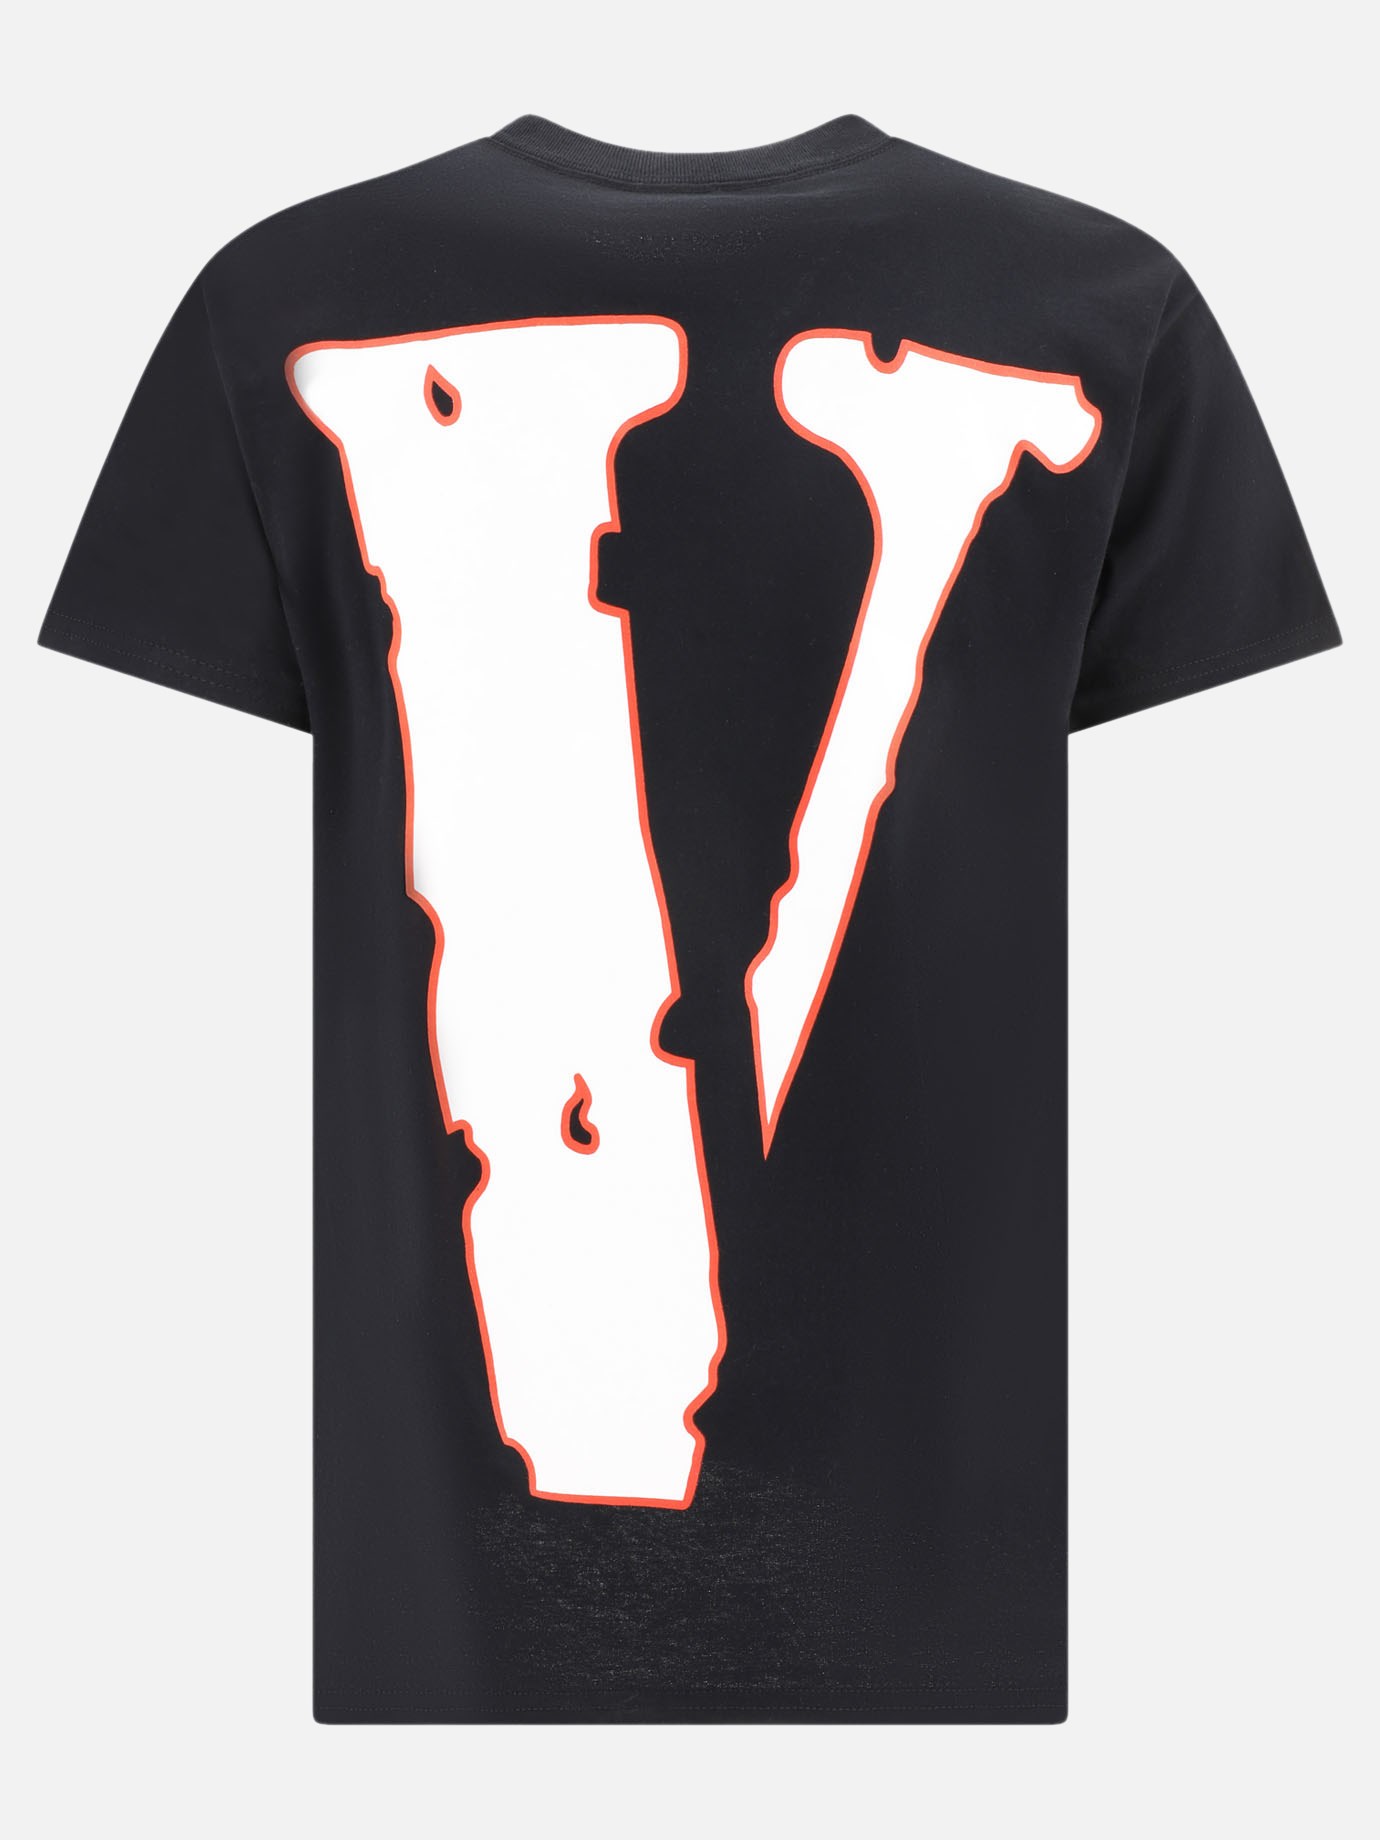 T-shirt  Murder Business YoungBoy NBA x Vlone  by Vlone